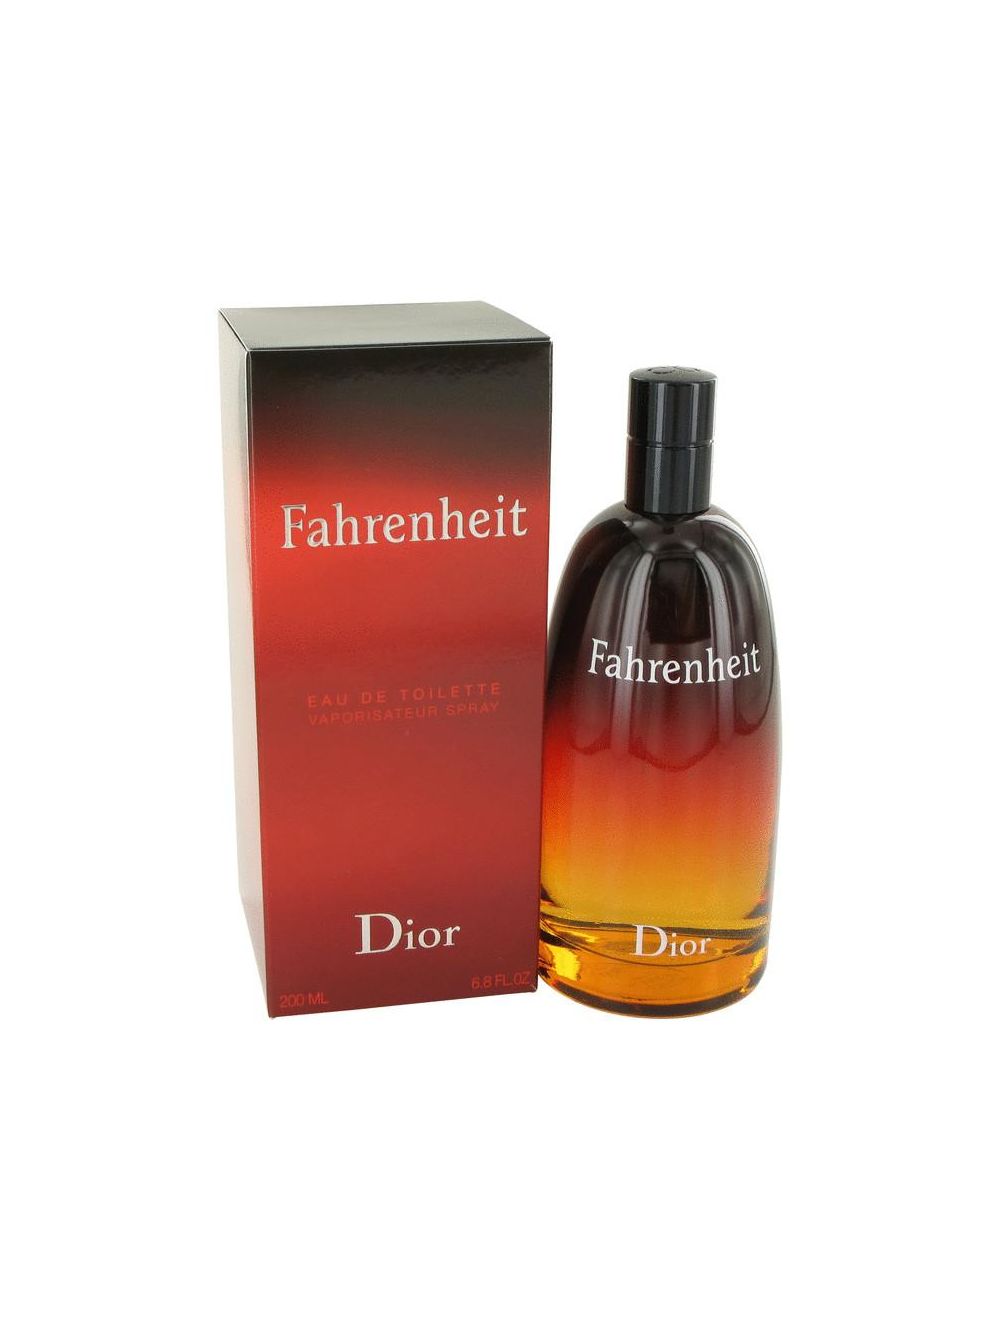 Christian Dior Fahrenheit Eau De Toilette Spray, Cologne for Men, 1.7 Oz 